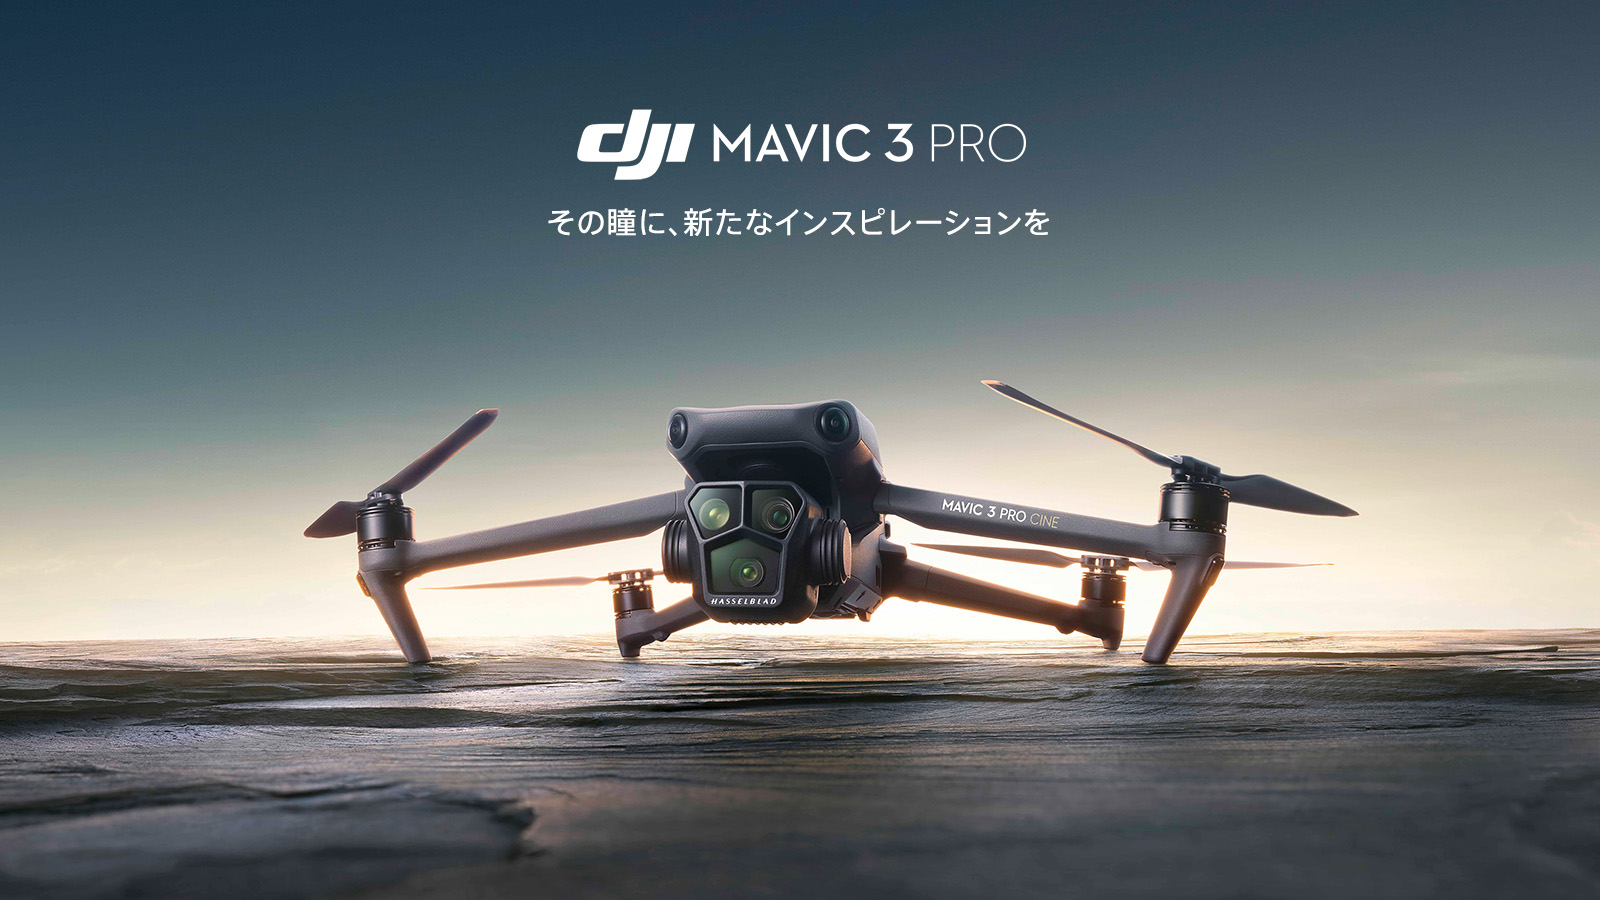 DJI、3眼カメラを搭載したドローン「Mavic 3 Pro」を発表 - ケータイ Watch